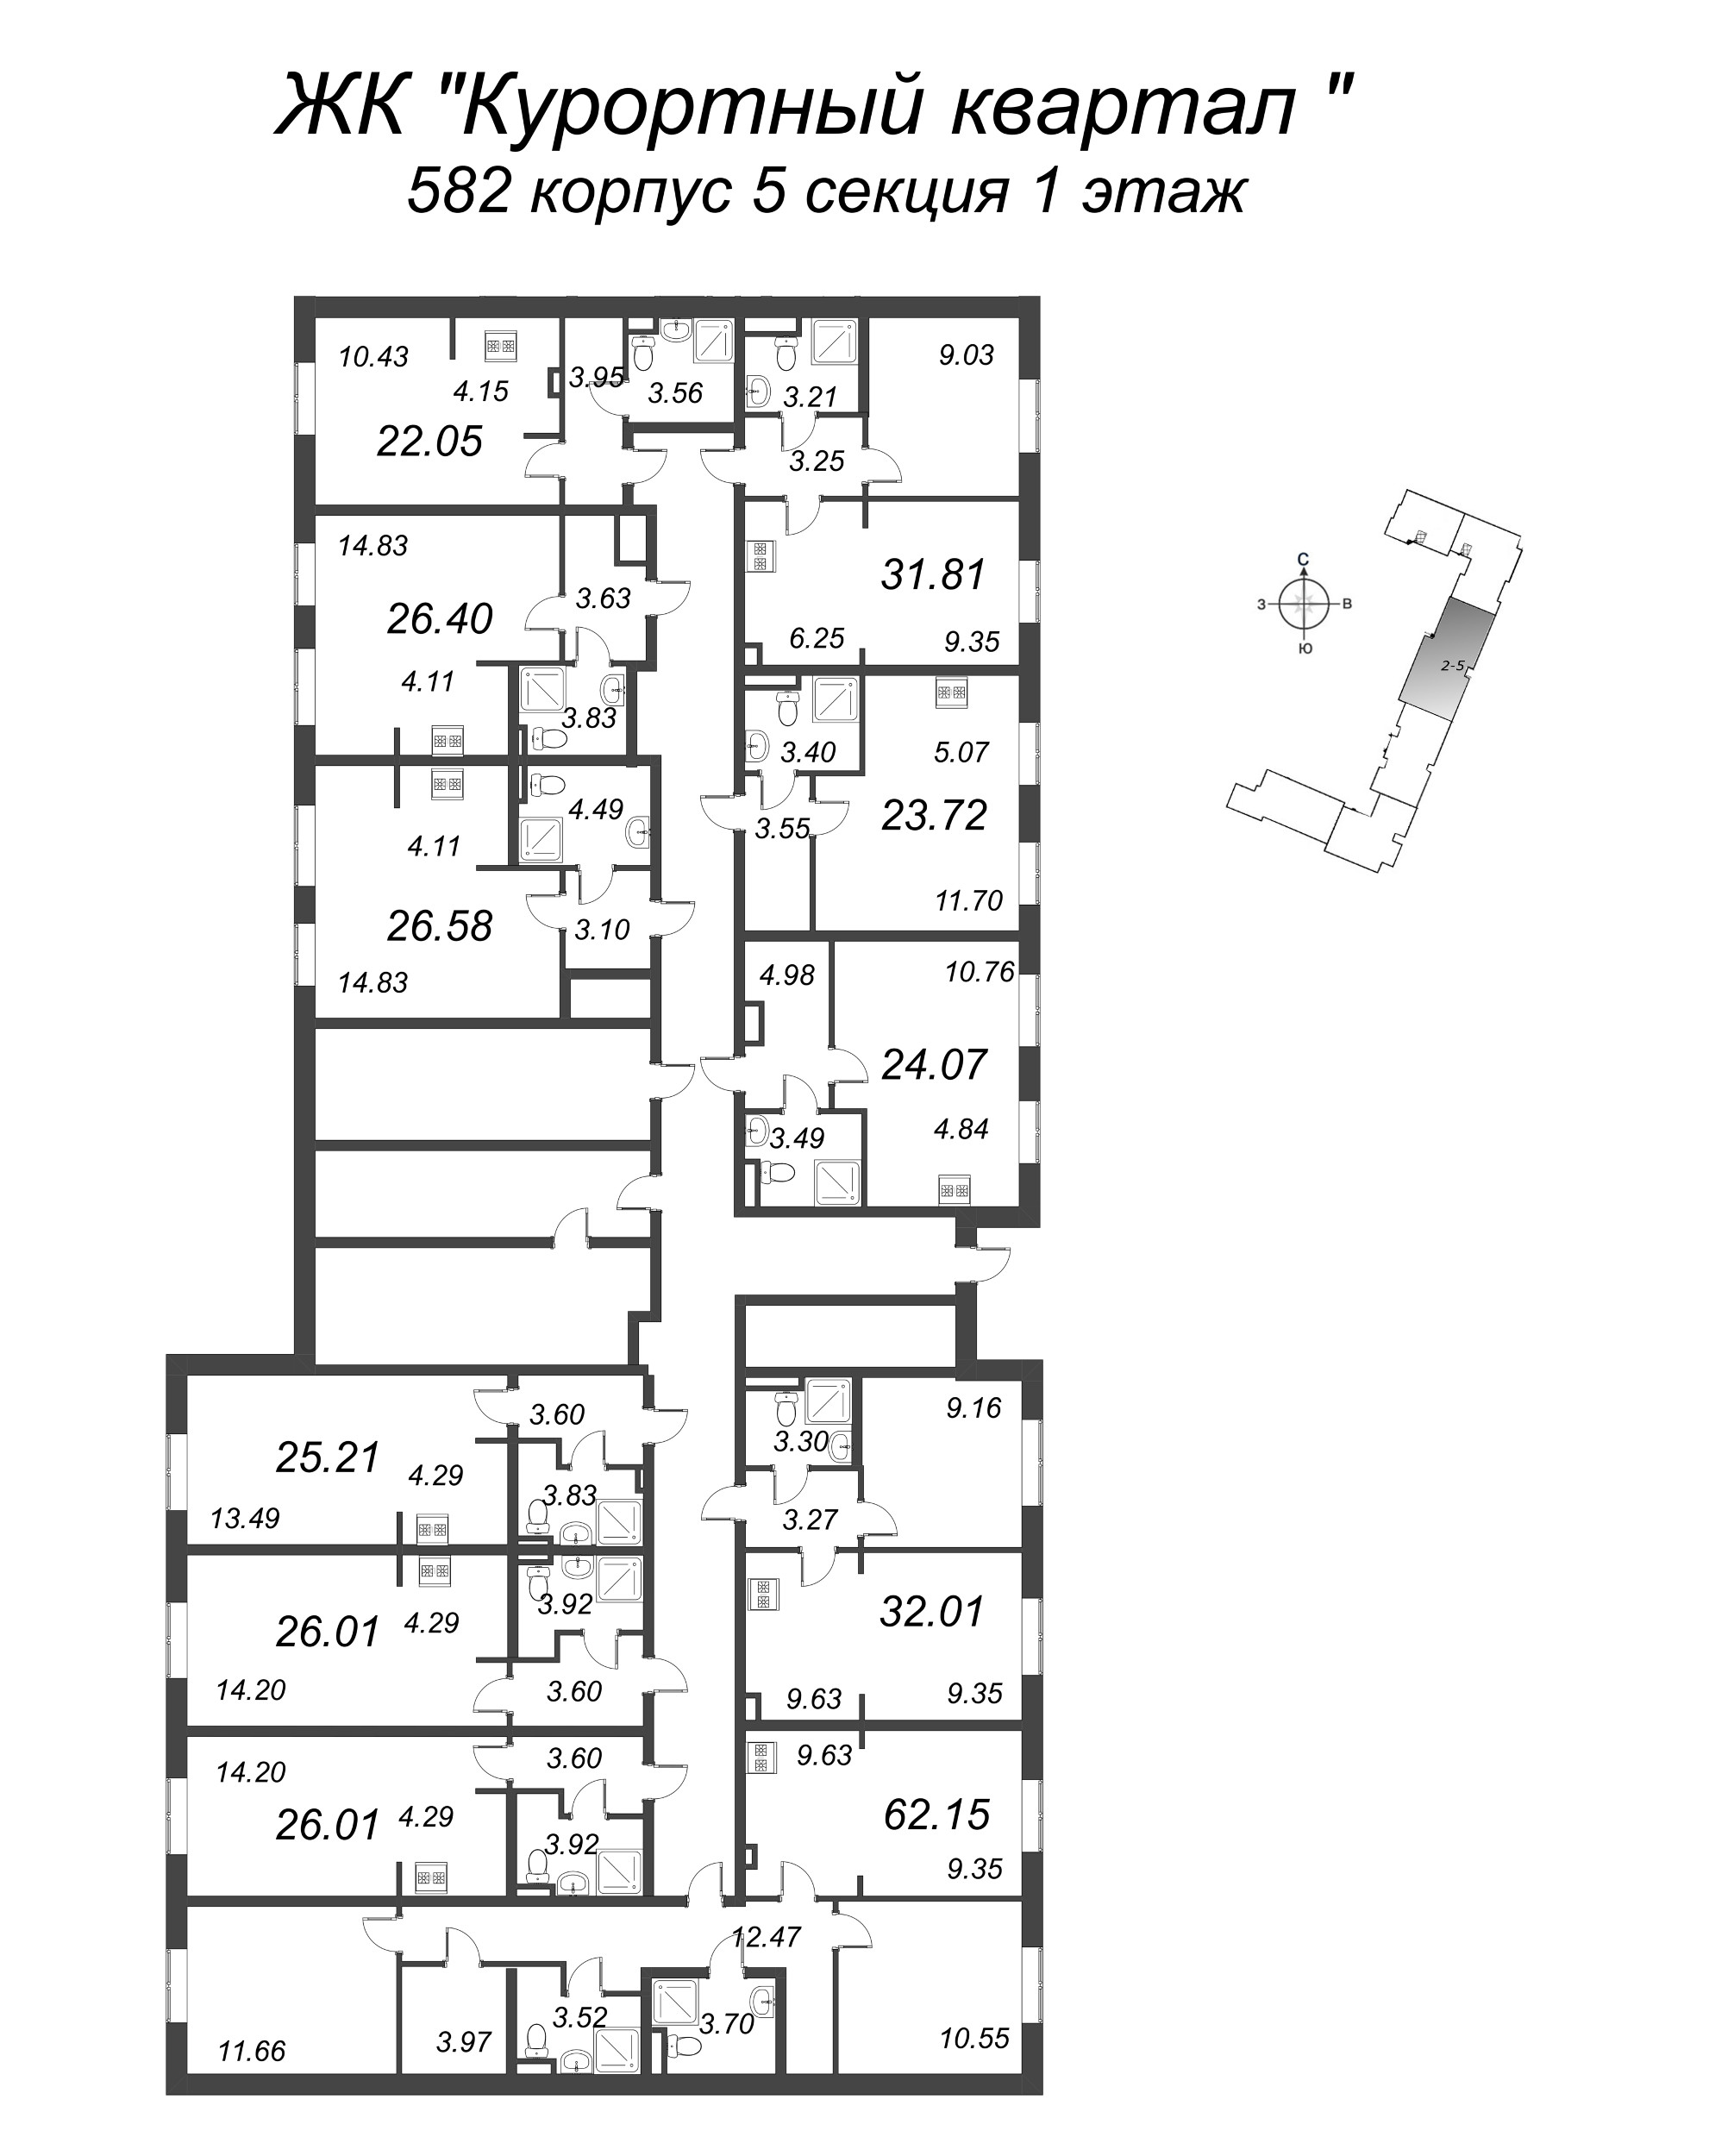 2-комнатная (Евро) квартира, 31.81 м² - планировка этажа